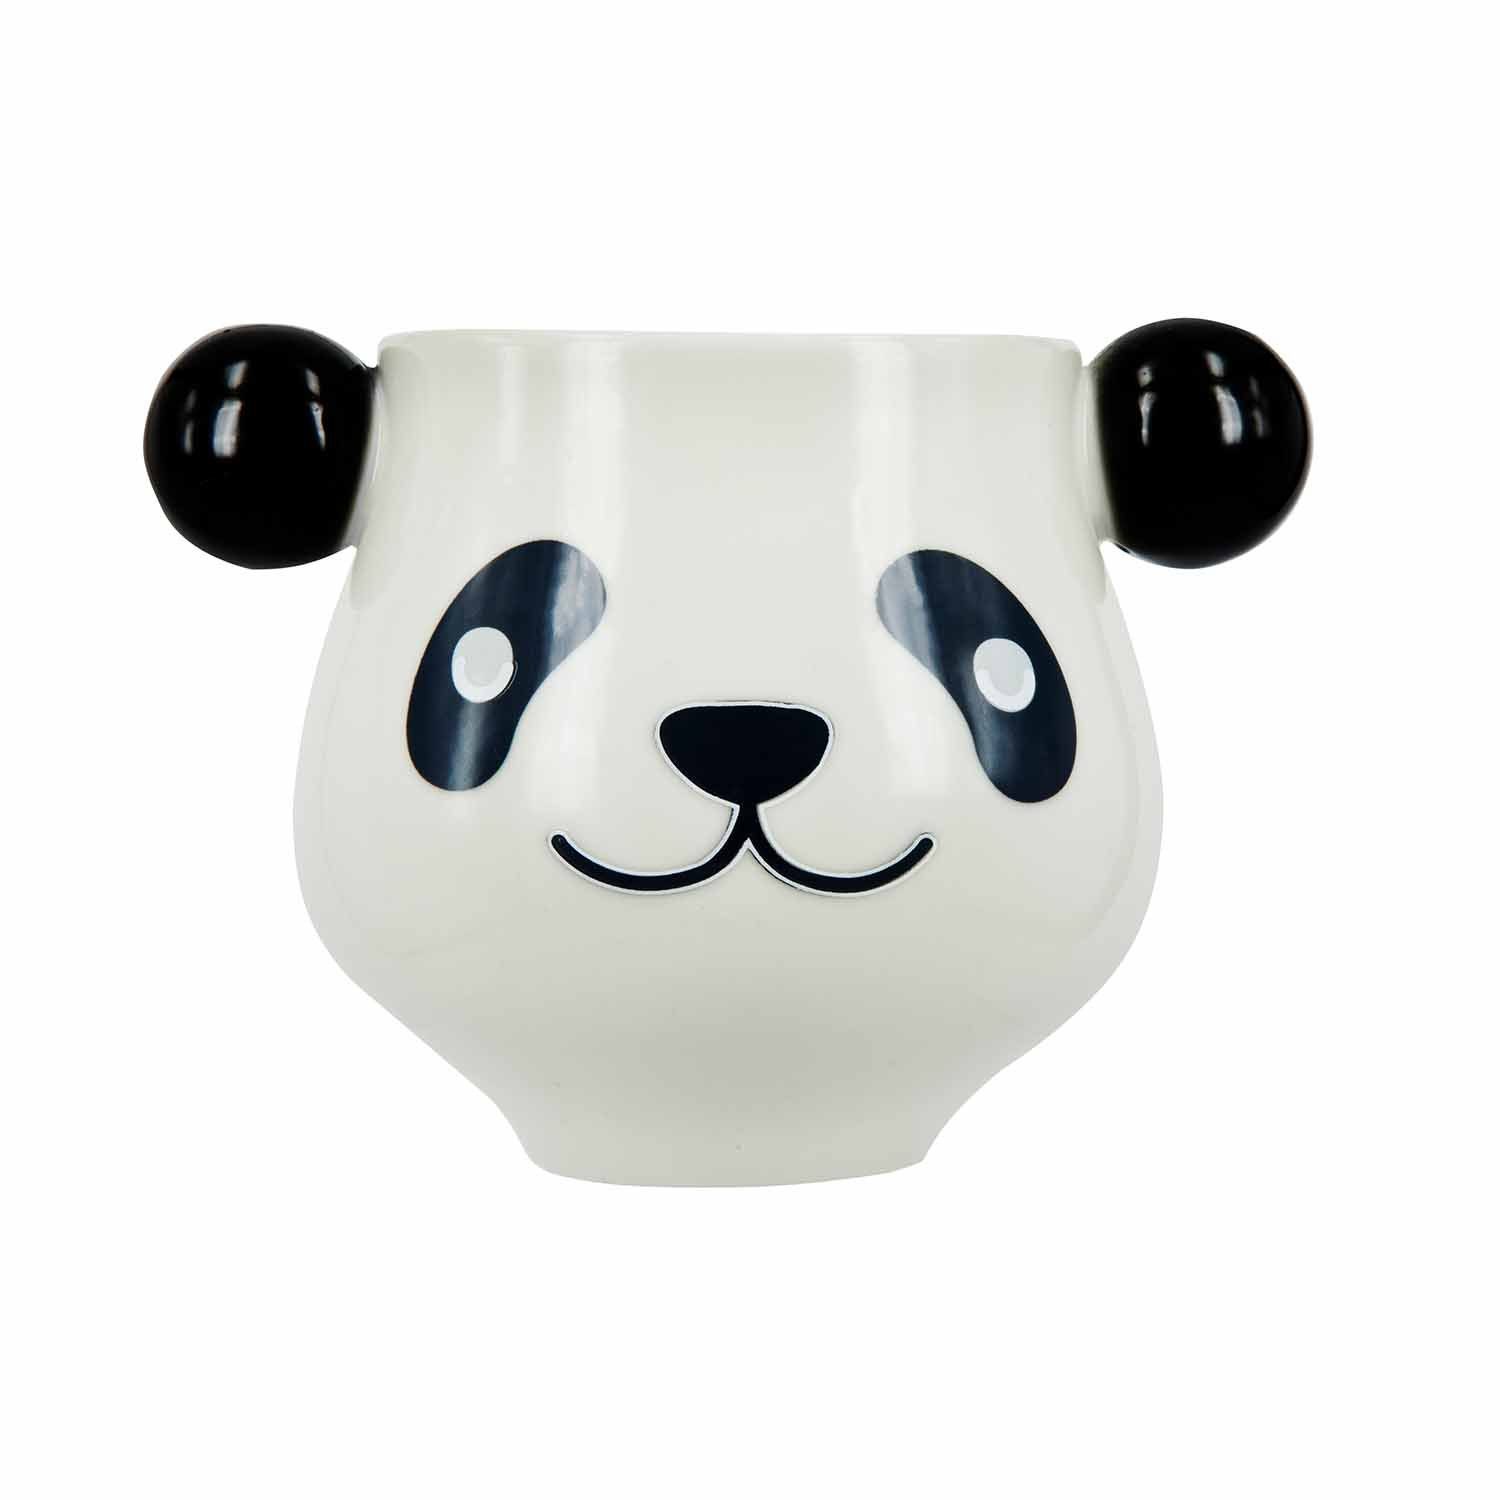 Thumbs Up Tasse "Panda Mug" mit - Farbwechsel, Farbwechseleffekt